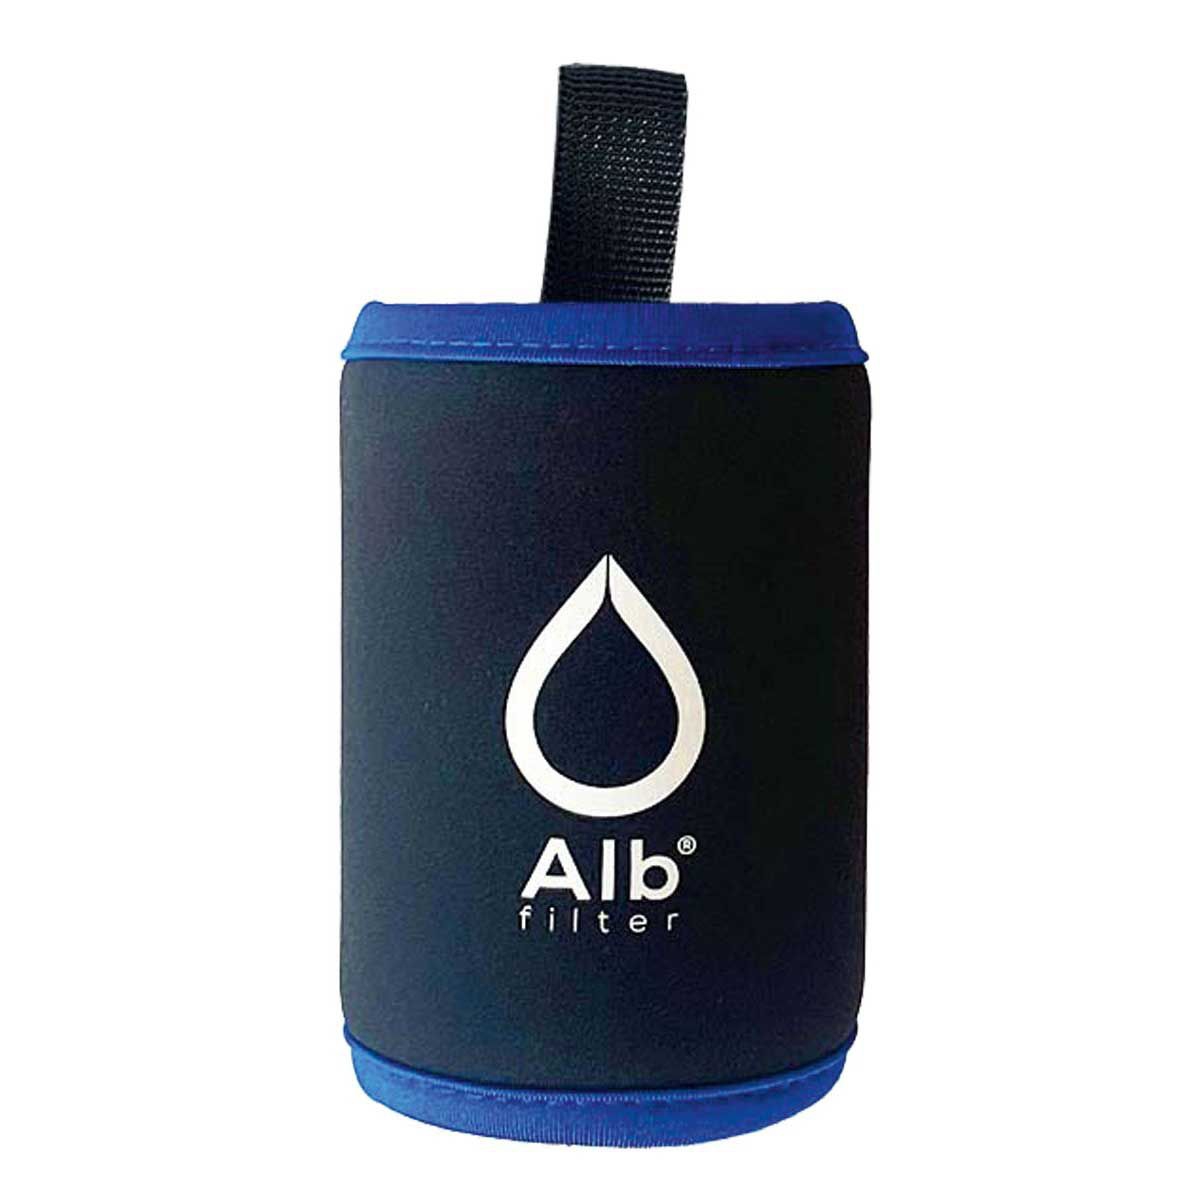 ALB Filter Neopren Schutzhuelle Single AR1838